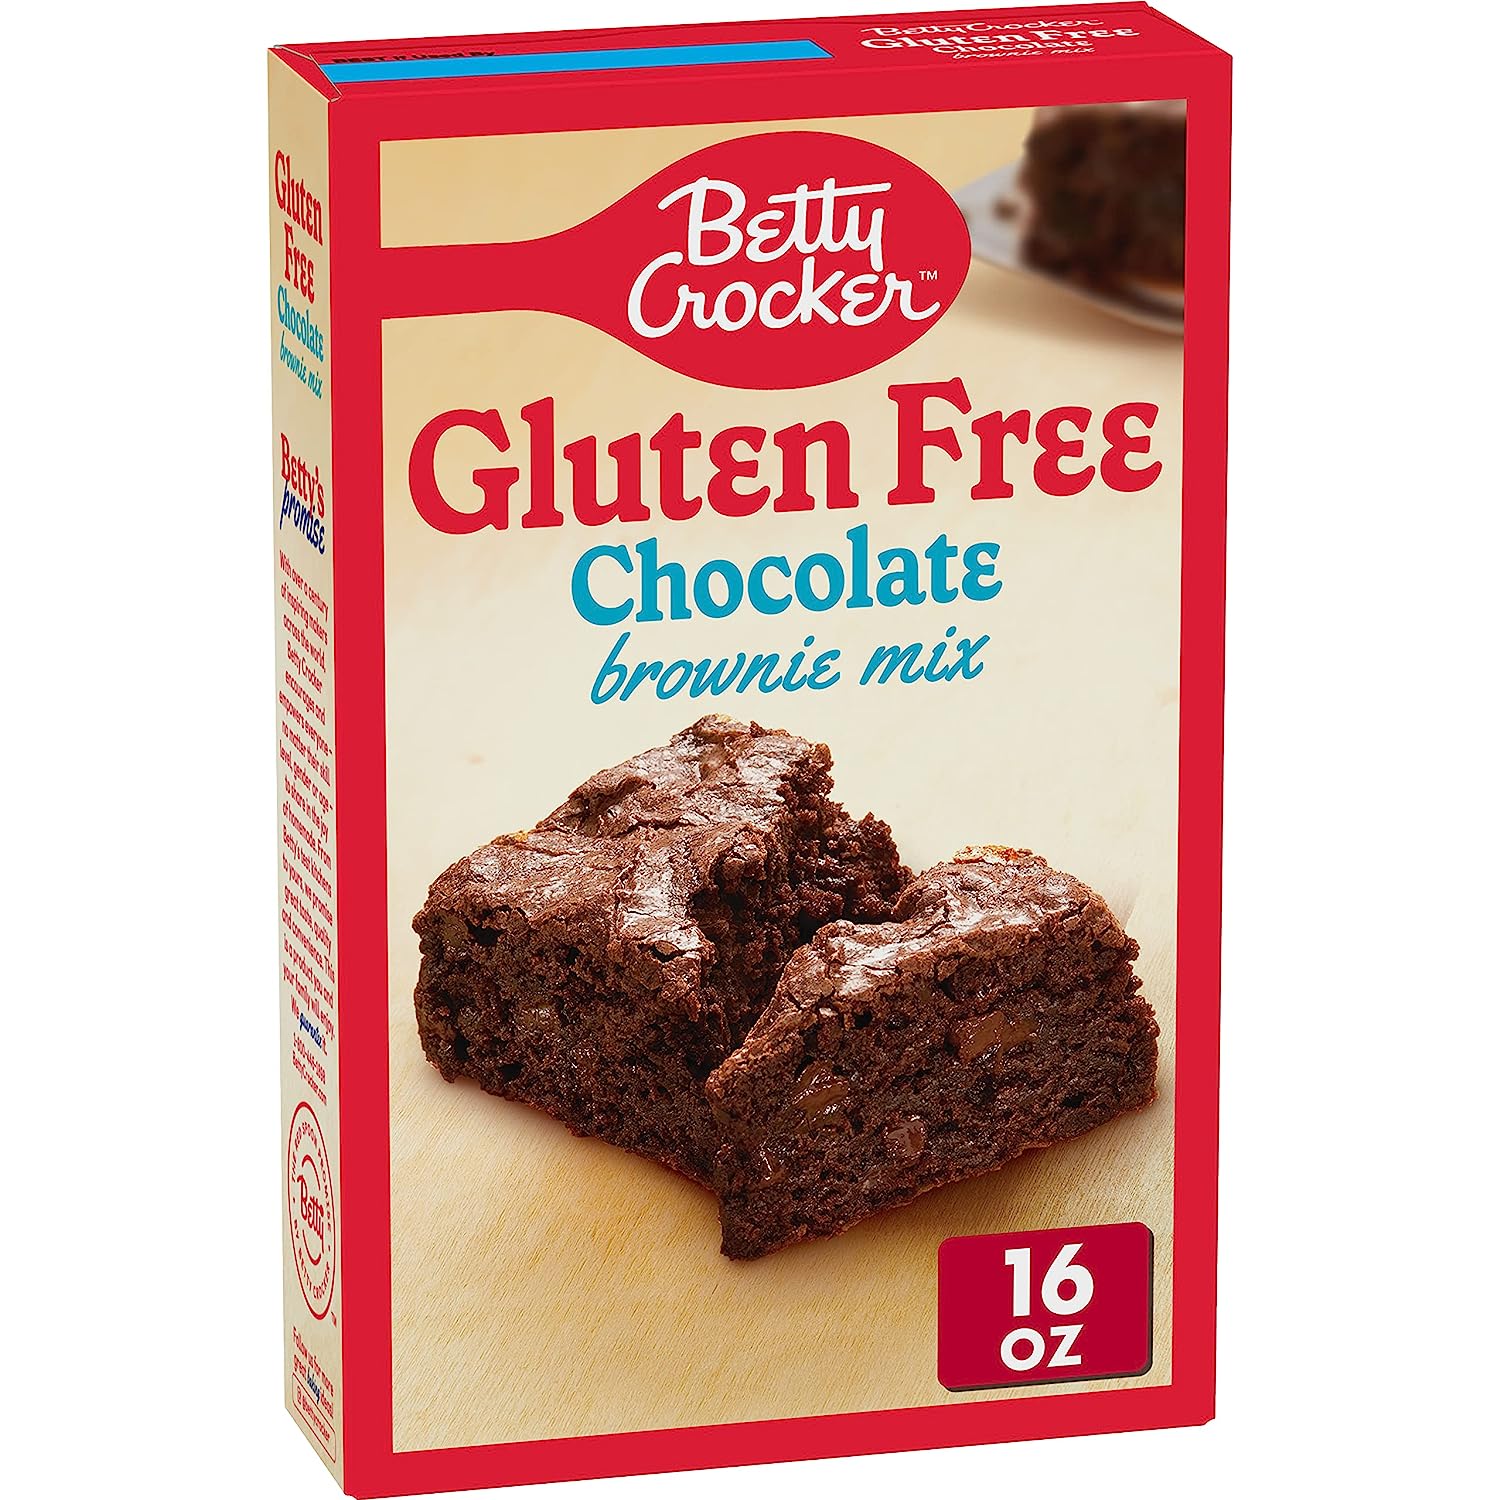 Betty Crocker Gluten Free Brownie Mix Review